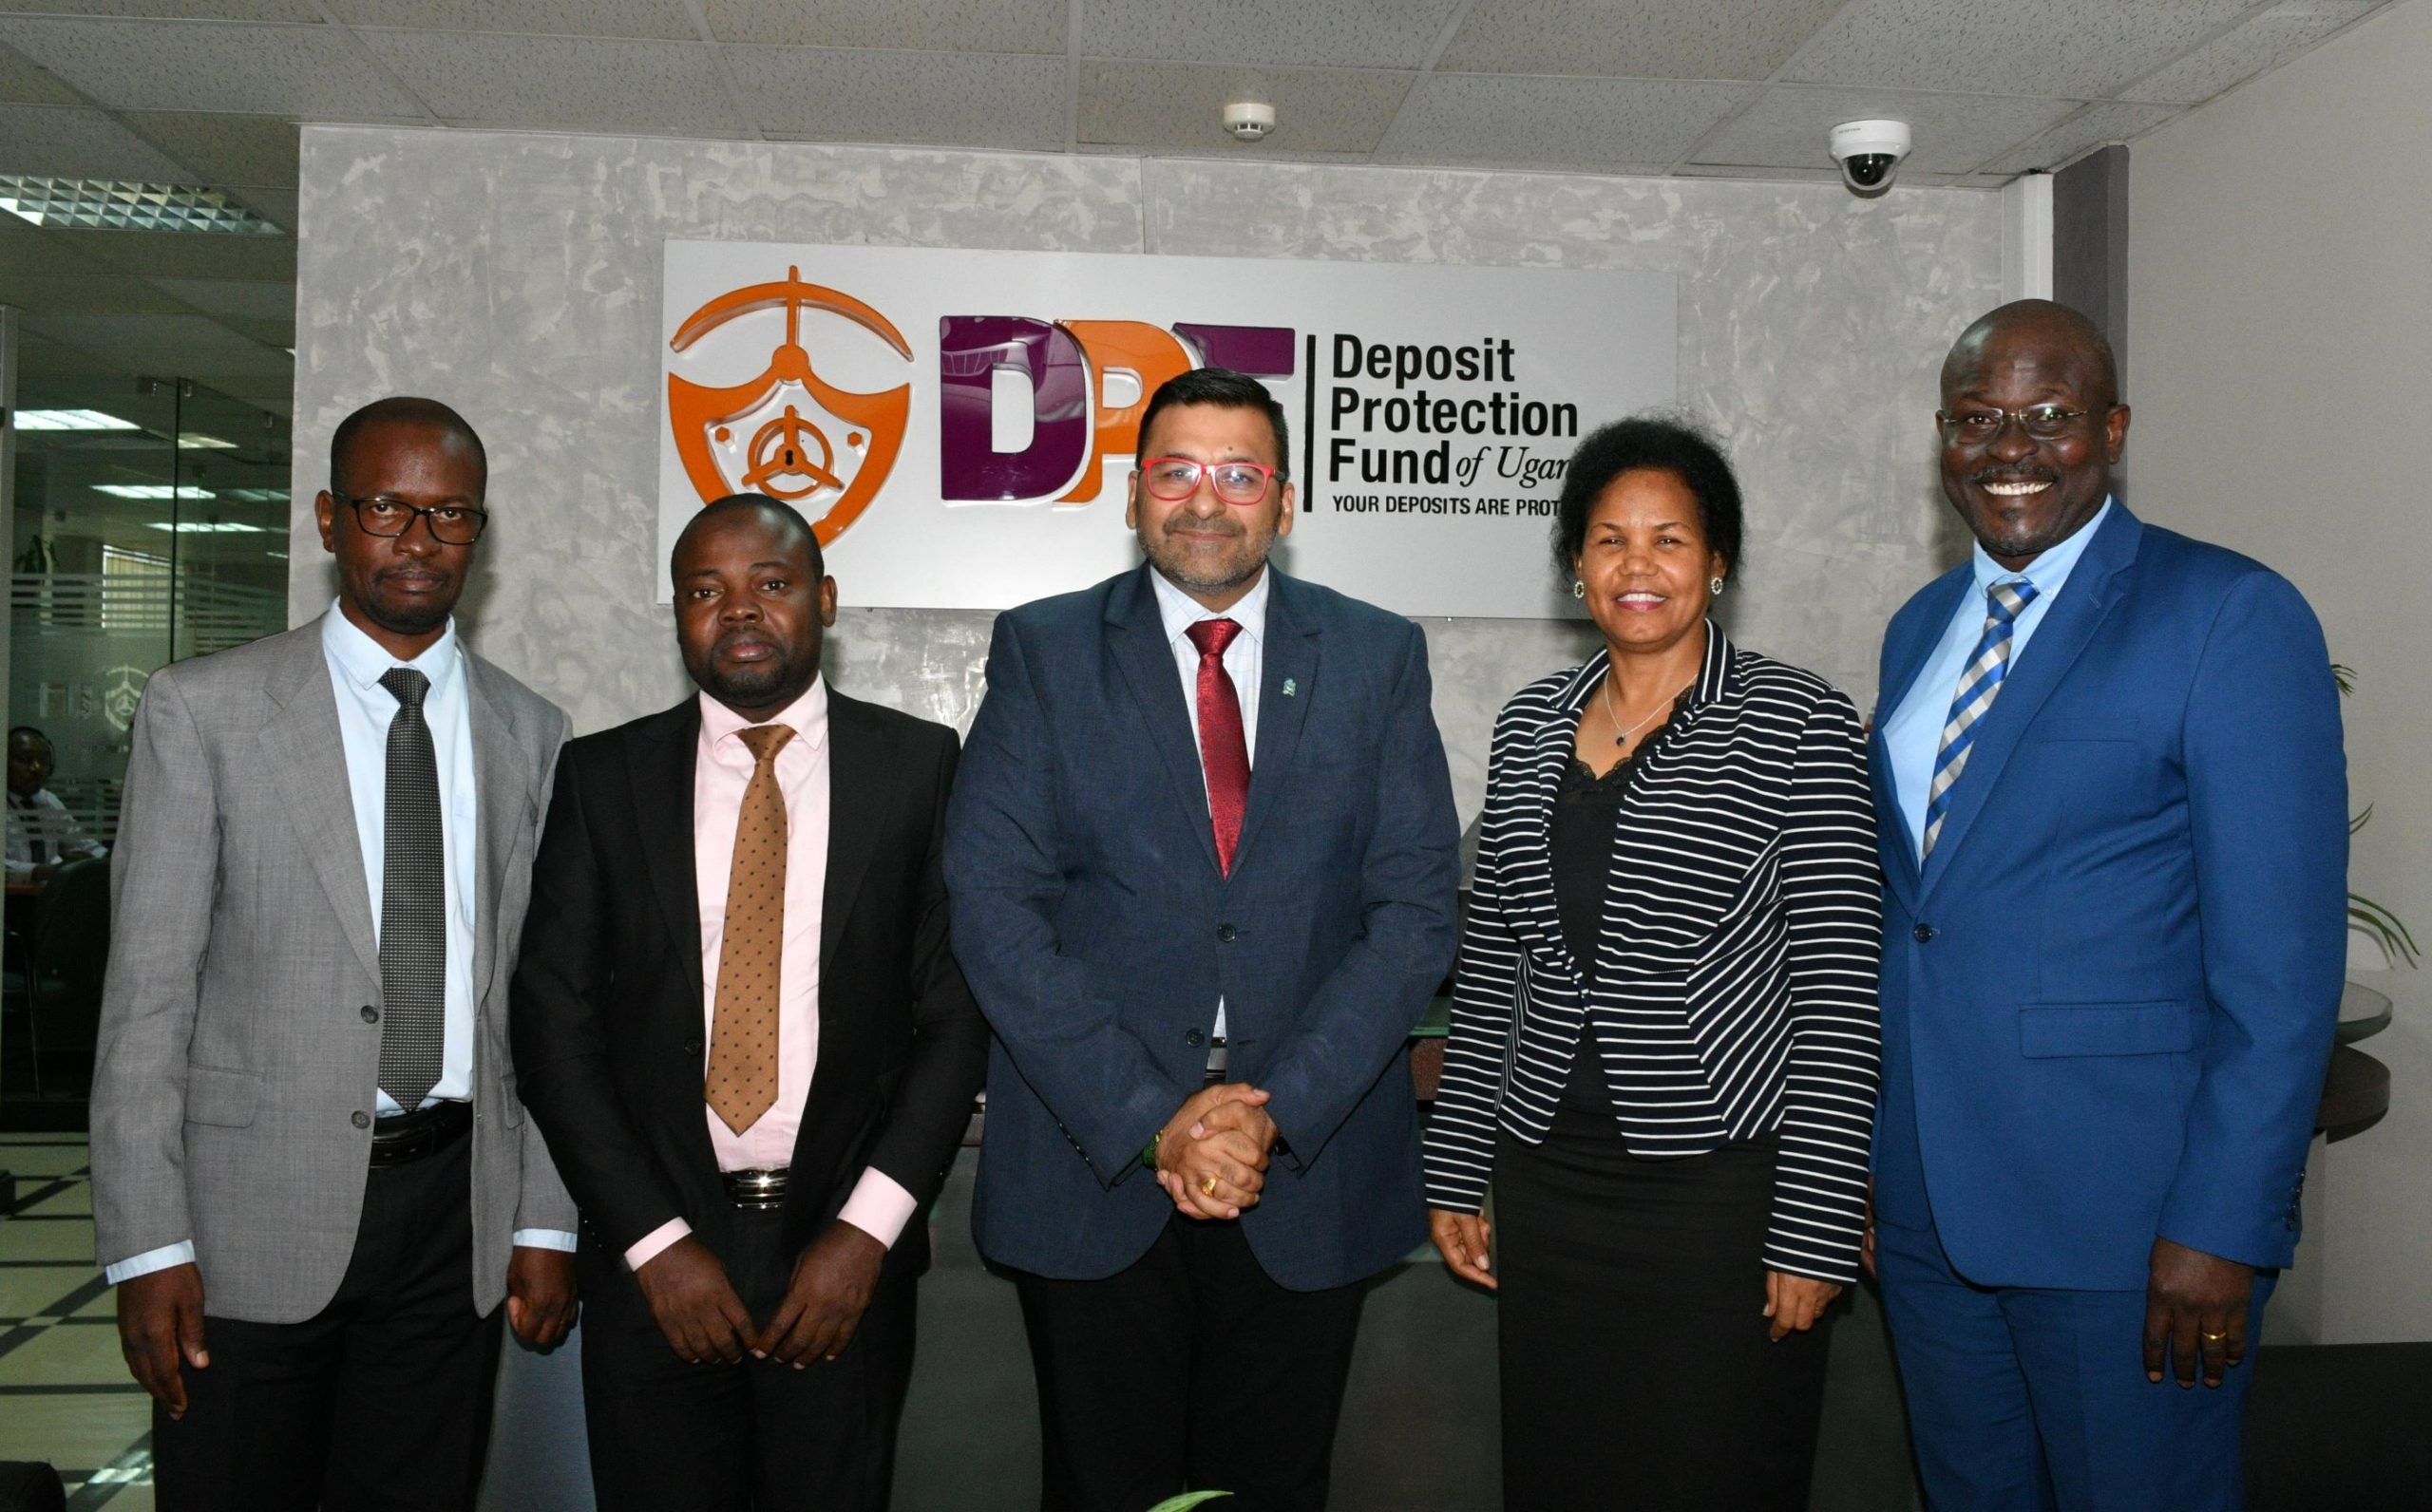 Standard Chartered Bank Courtesy Visit To Deposit Protection Fund Of Uganda